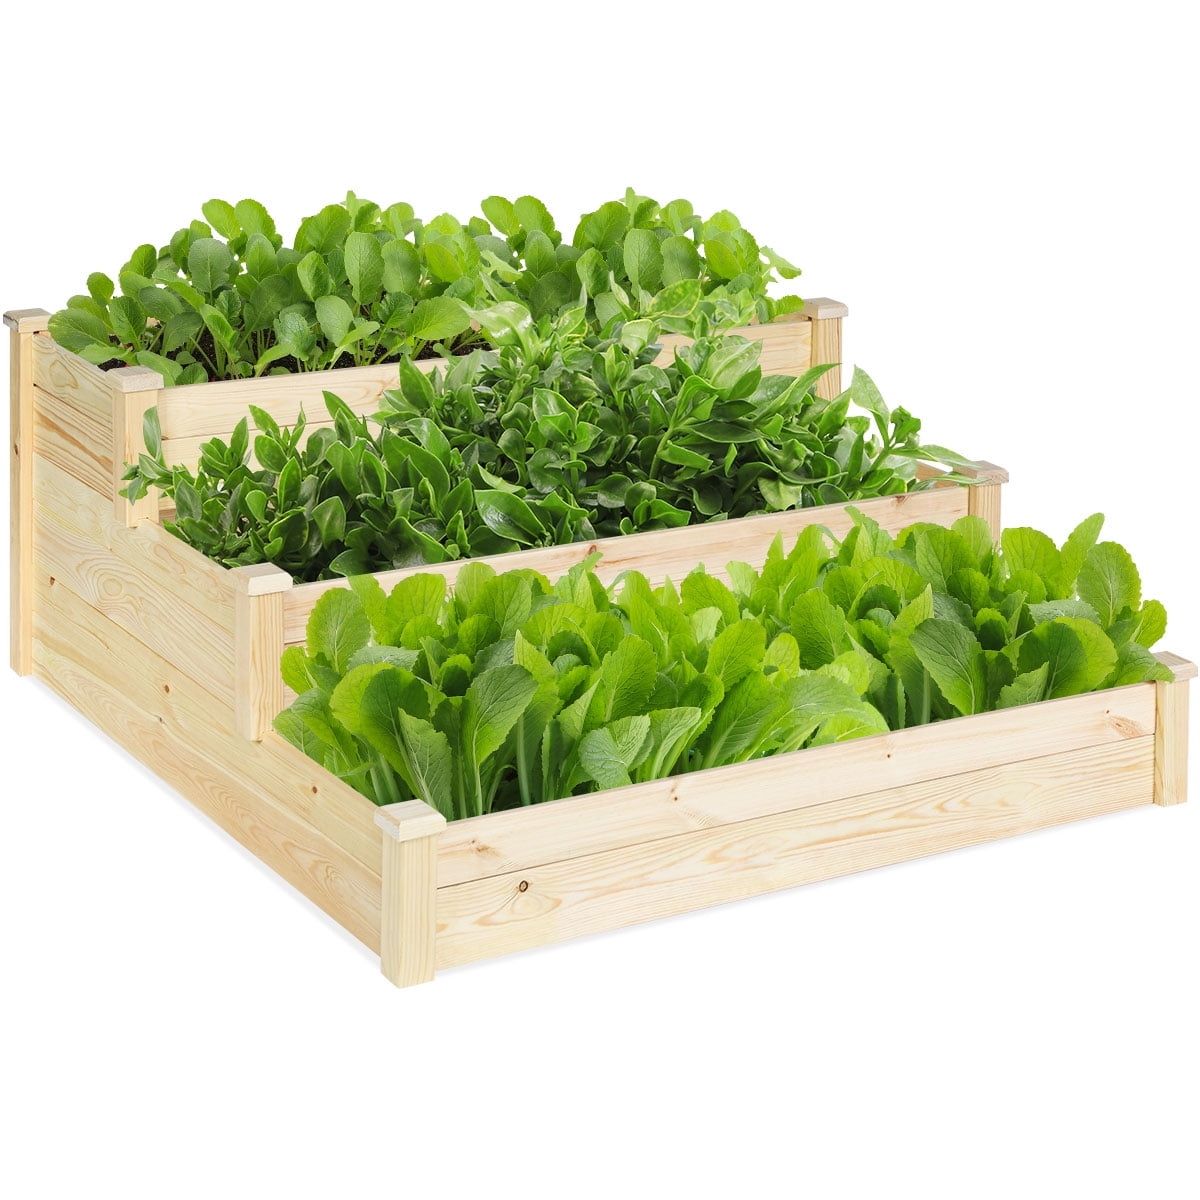 Wooden Raised Vegetable Garden Bed 3 Tier Elevated Planter Kit